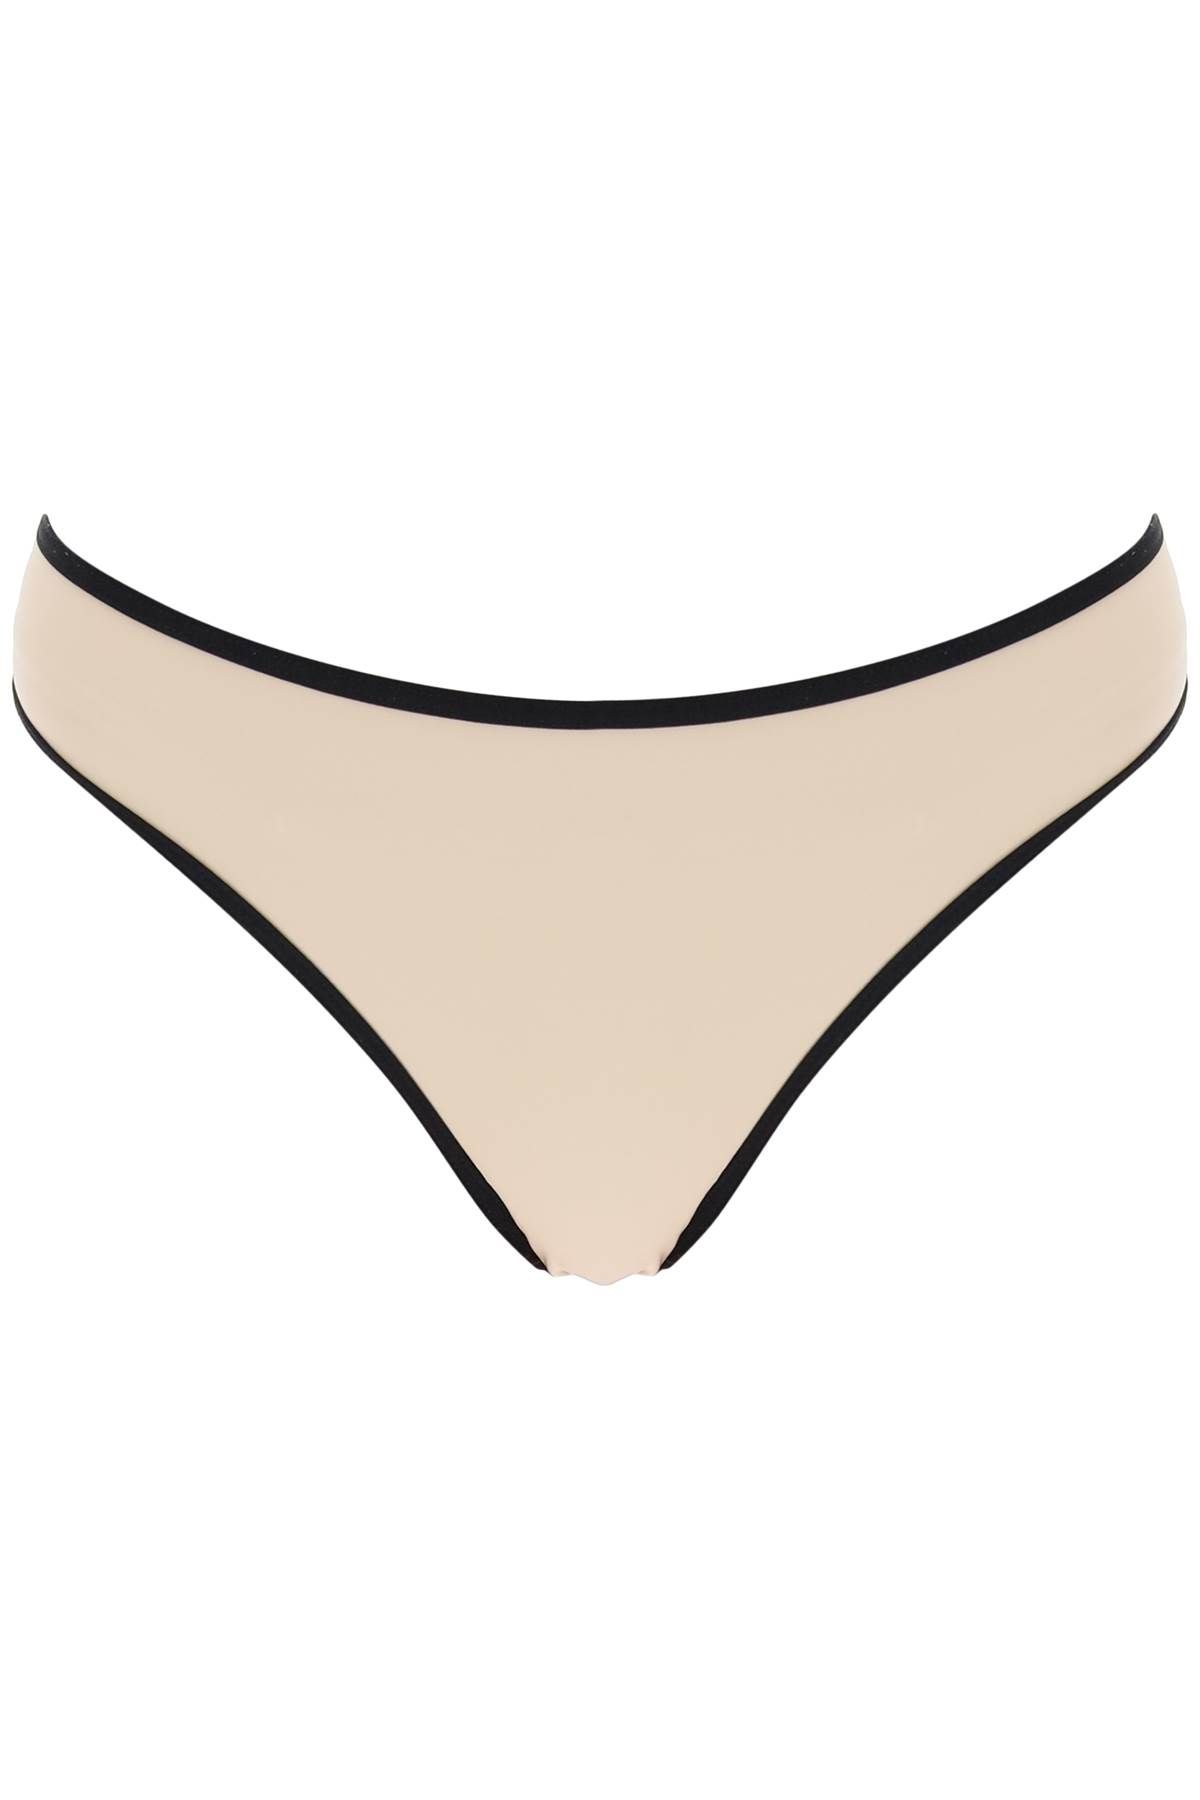 Shop Totême "bikini Bottom With Contrasting Edge Trim In Beige